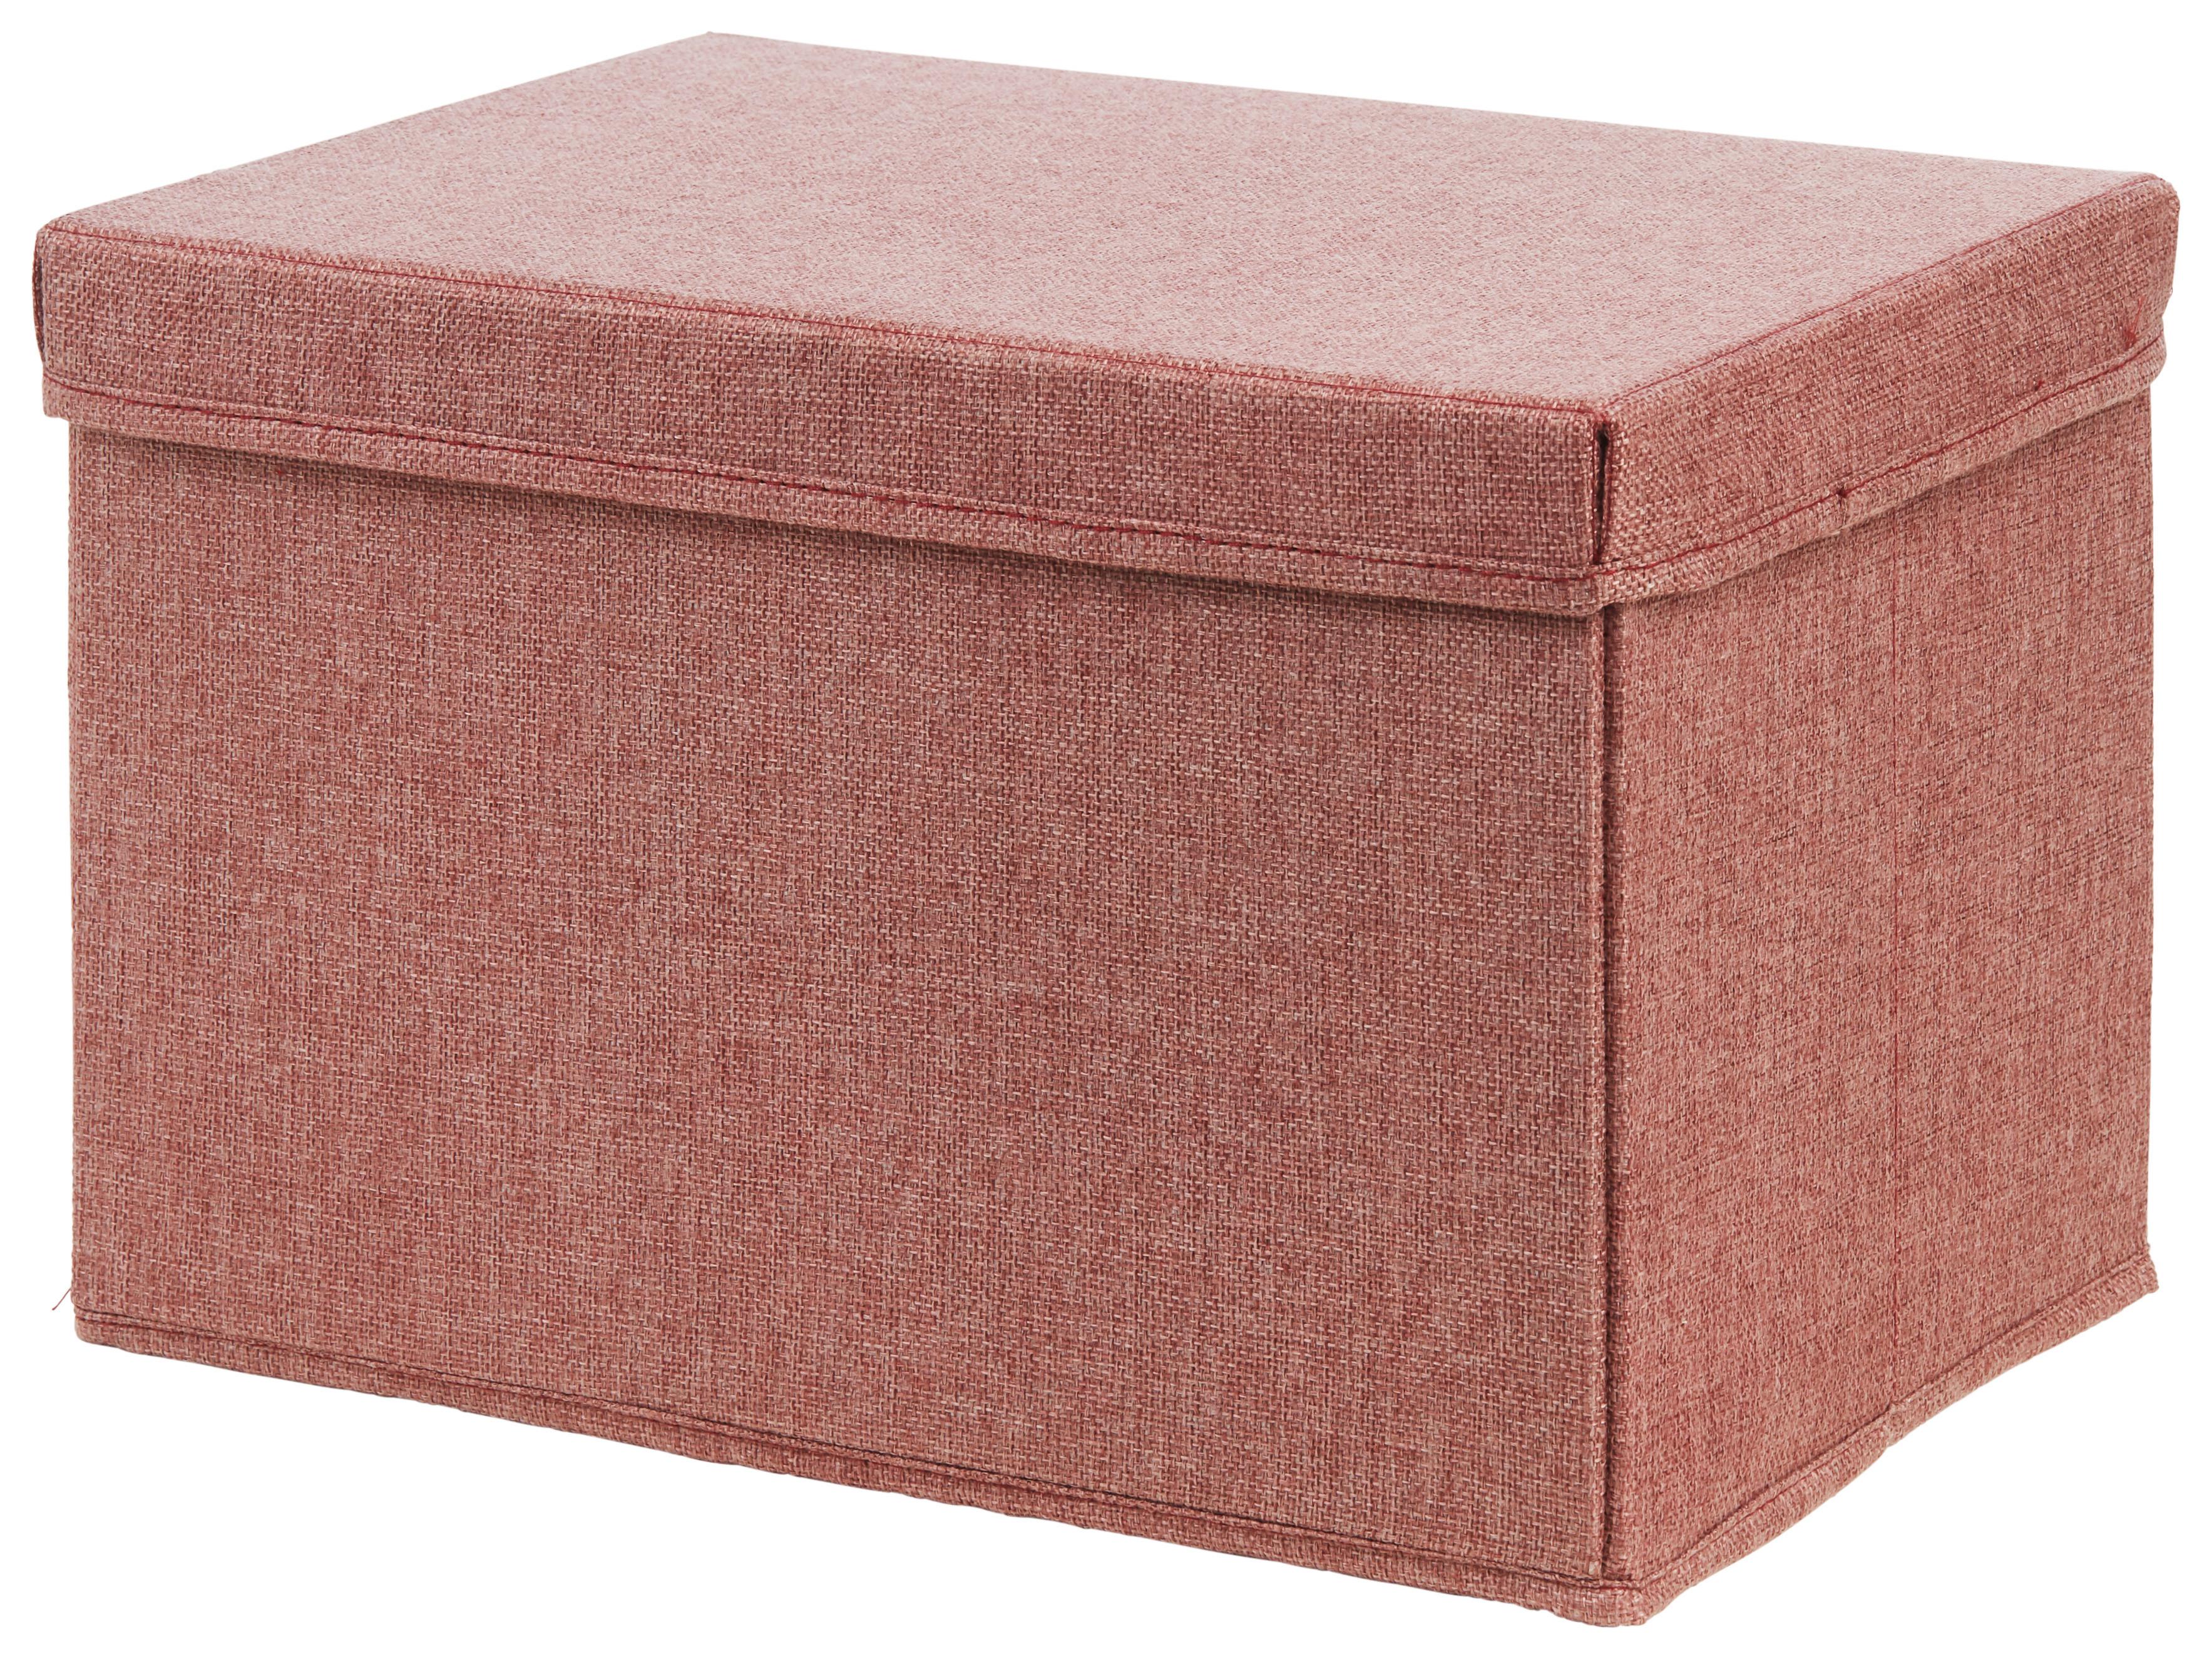 Skládací Krabice Cindy - Ca. 23l -Ext- - červenohnědá, Moderní, karton/textil (38/26/24cm) - Premium Living